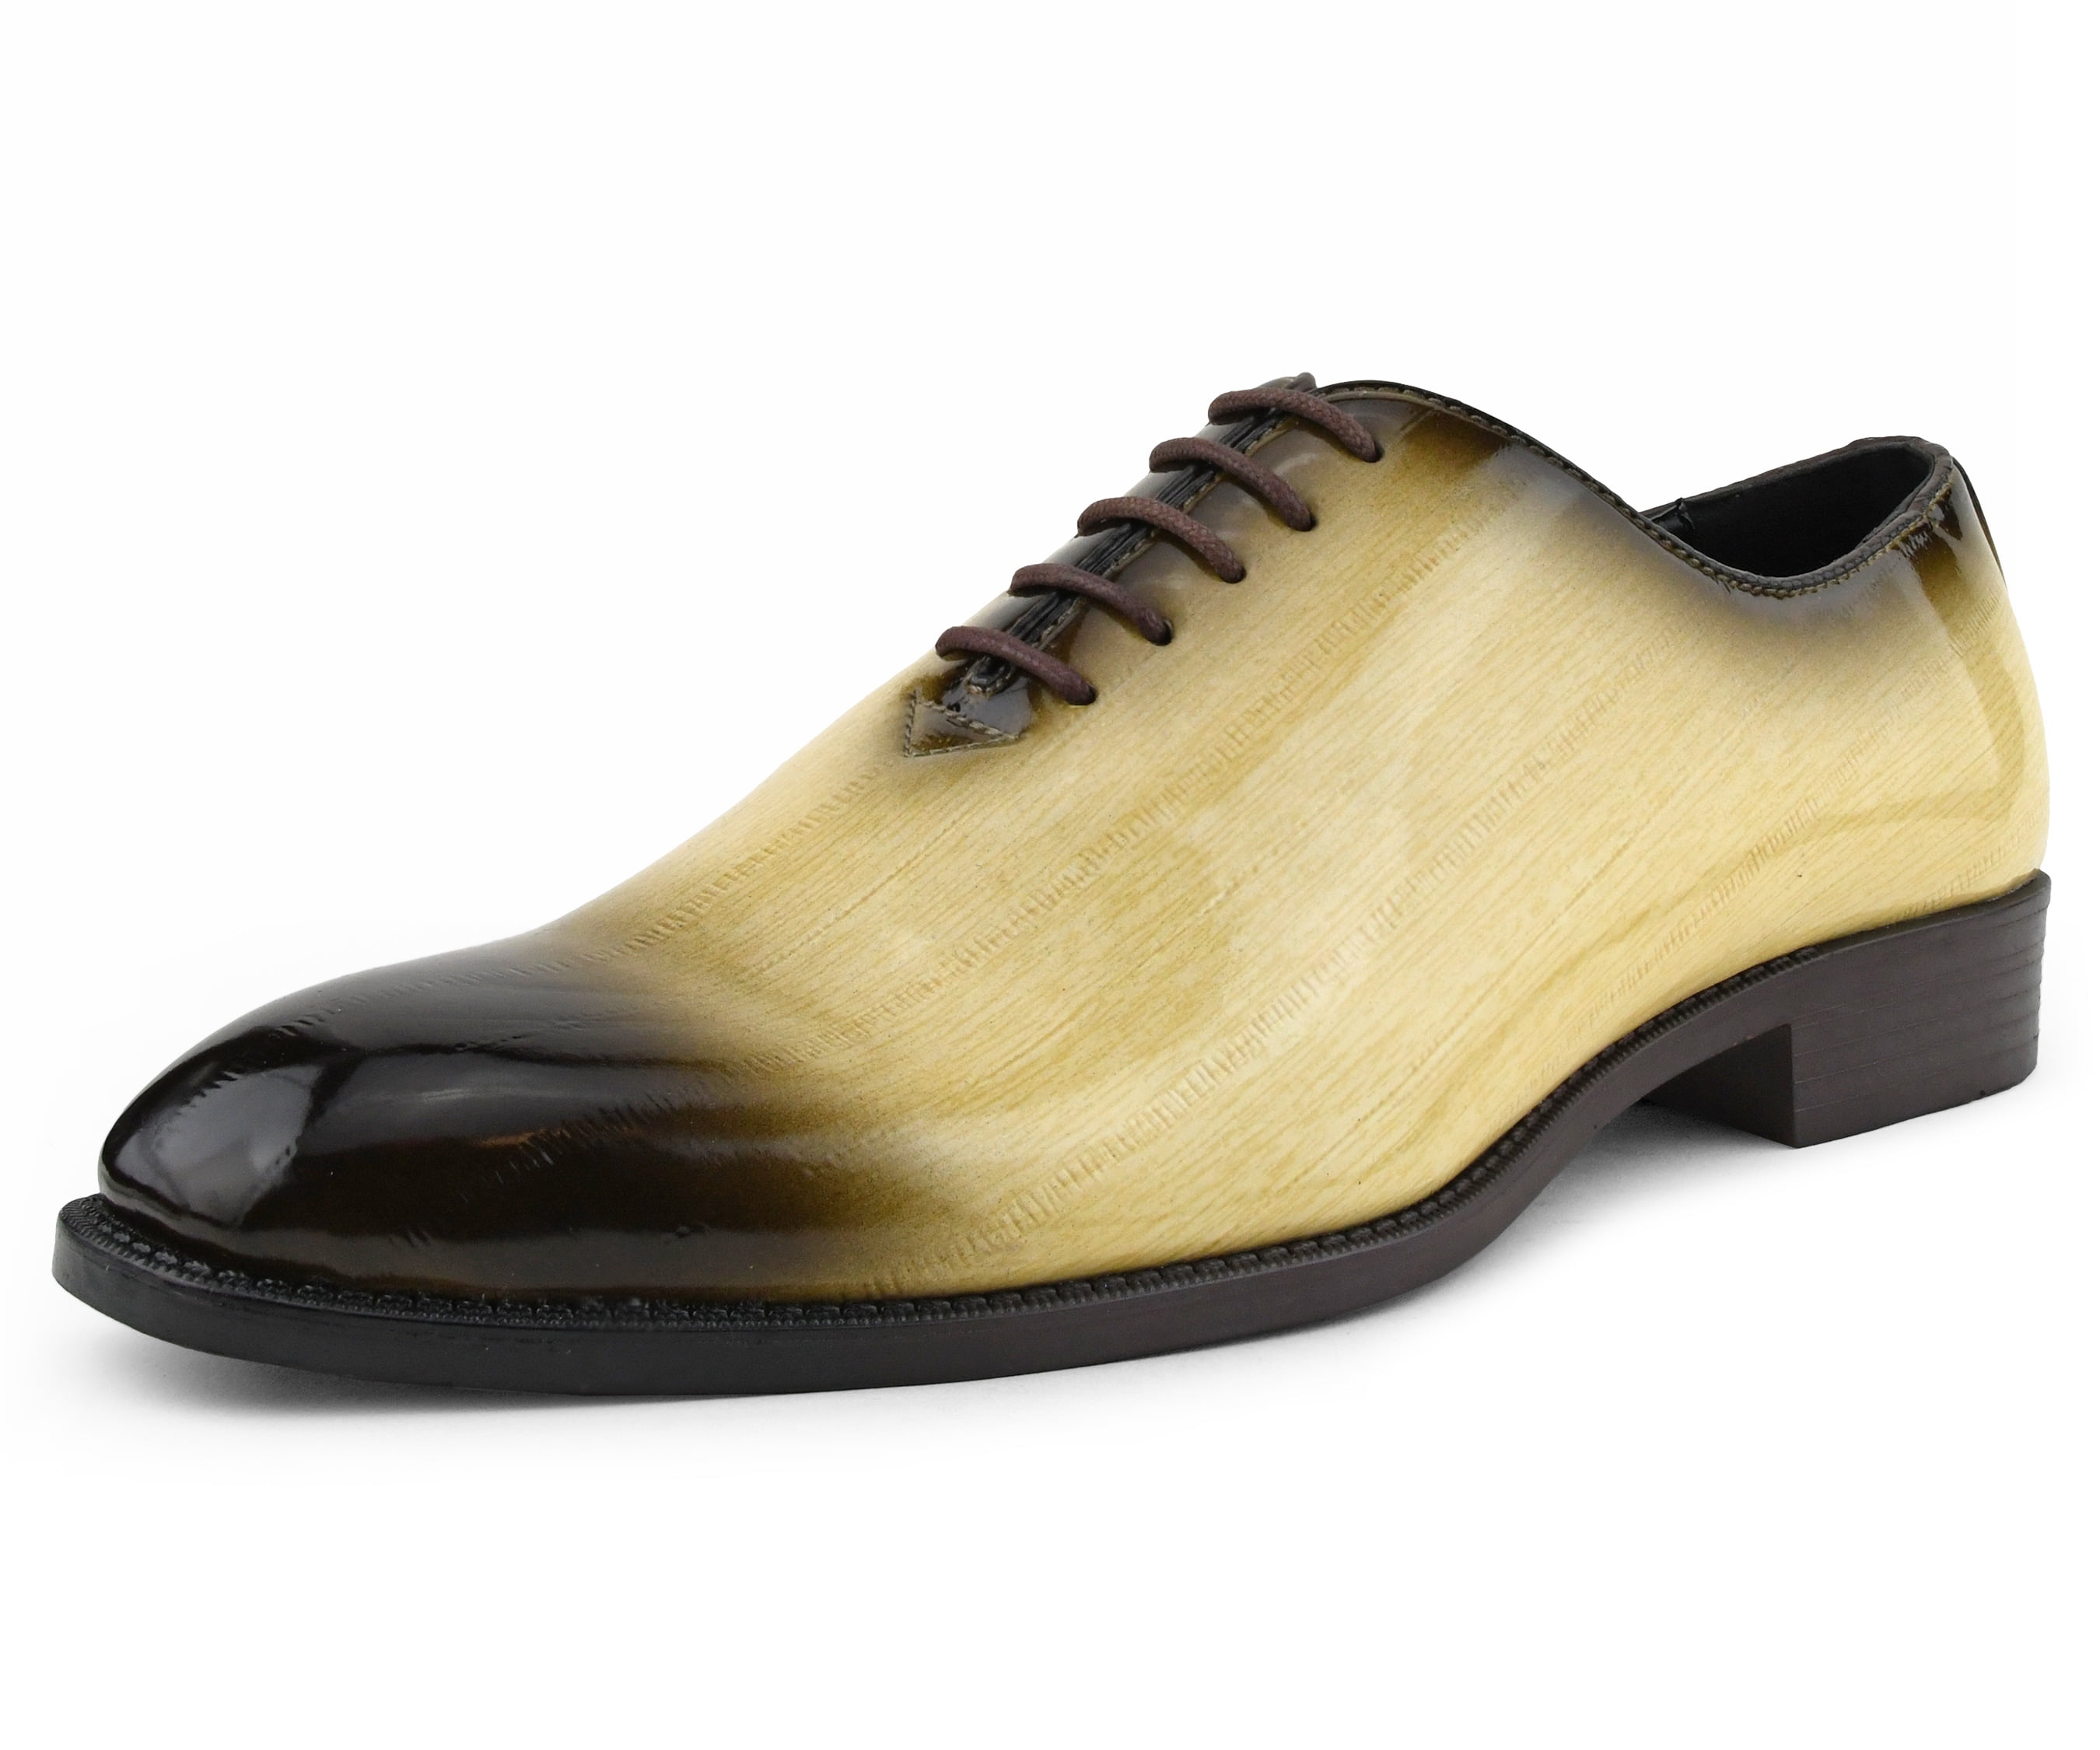 dress shoes for men at walmart